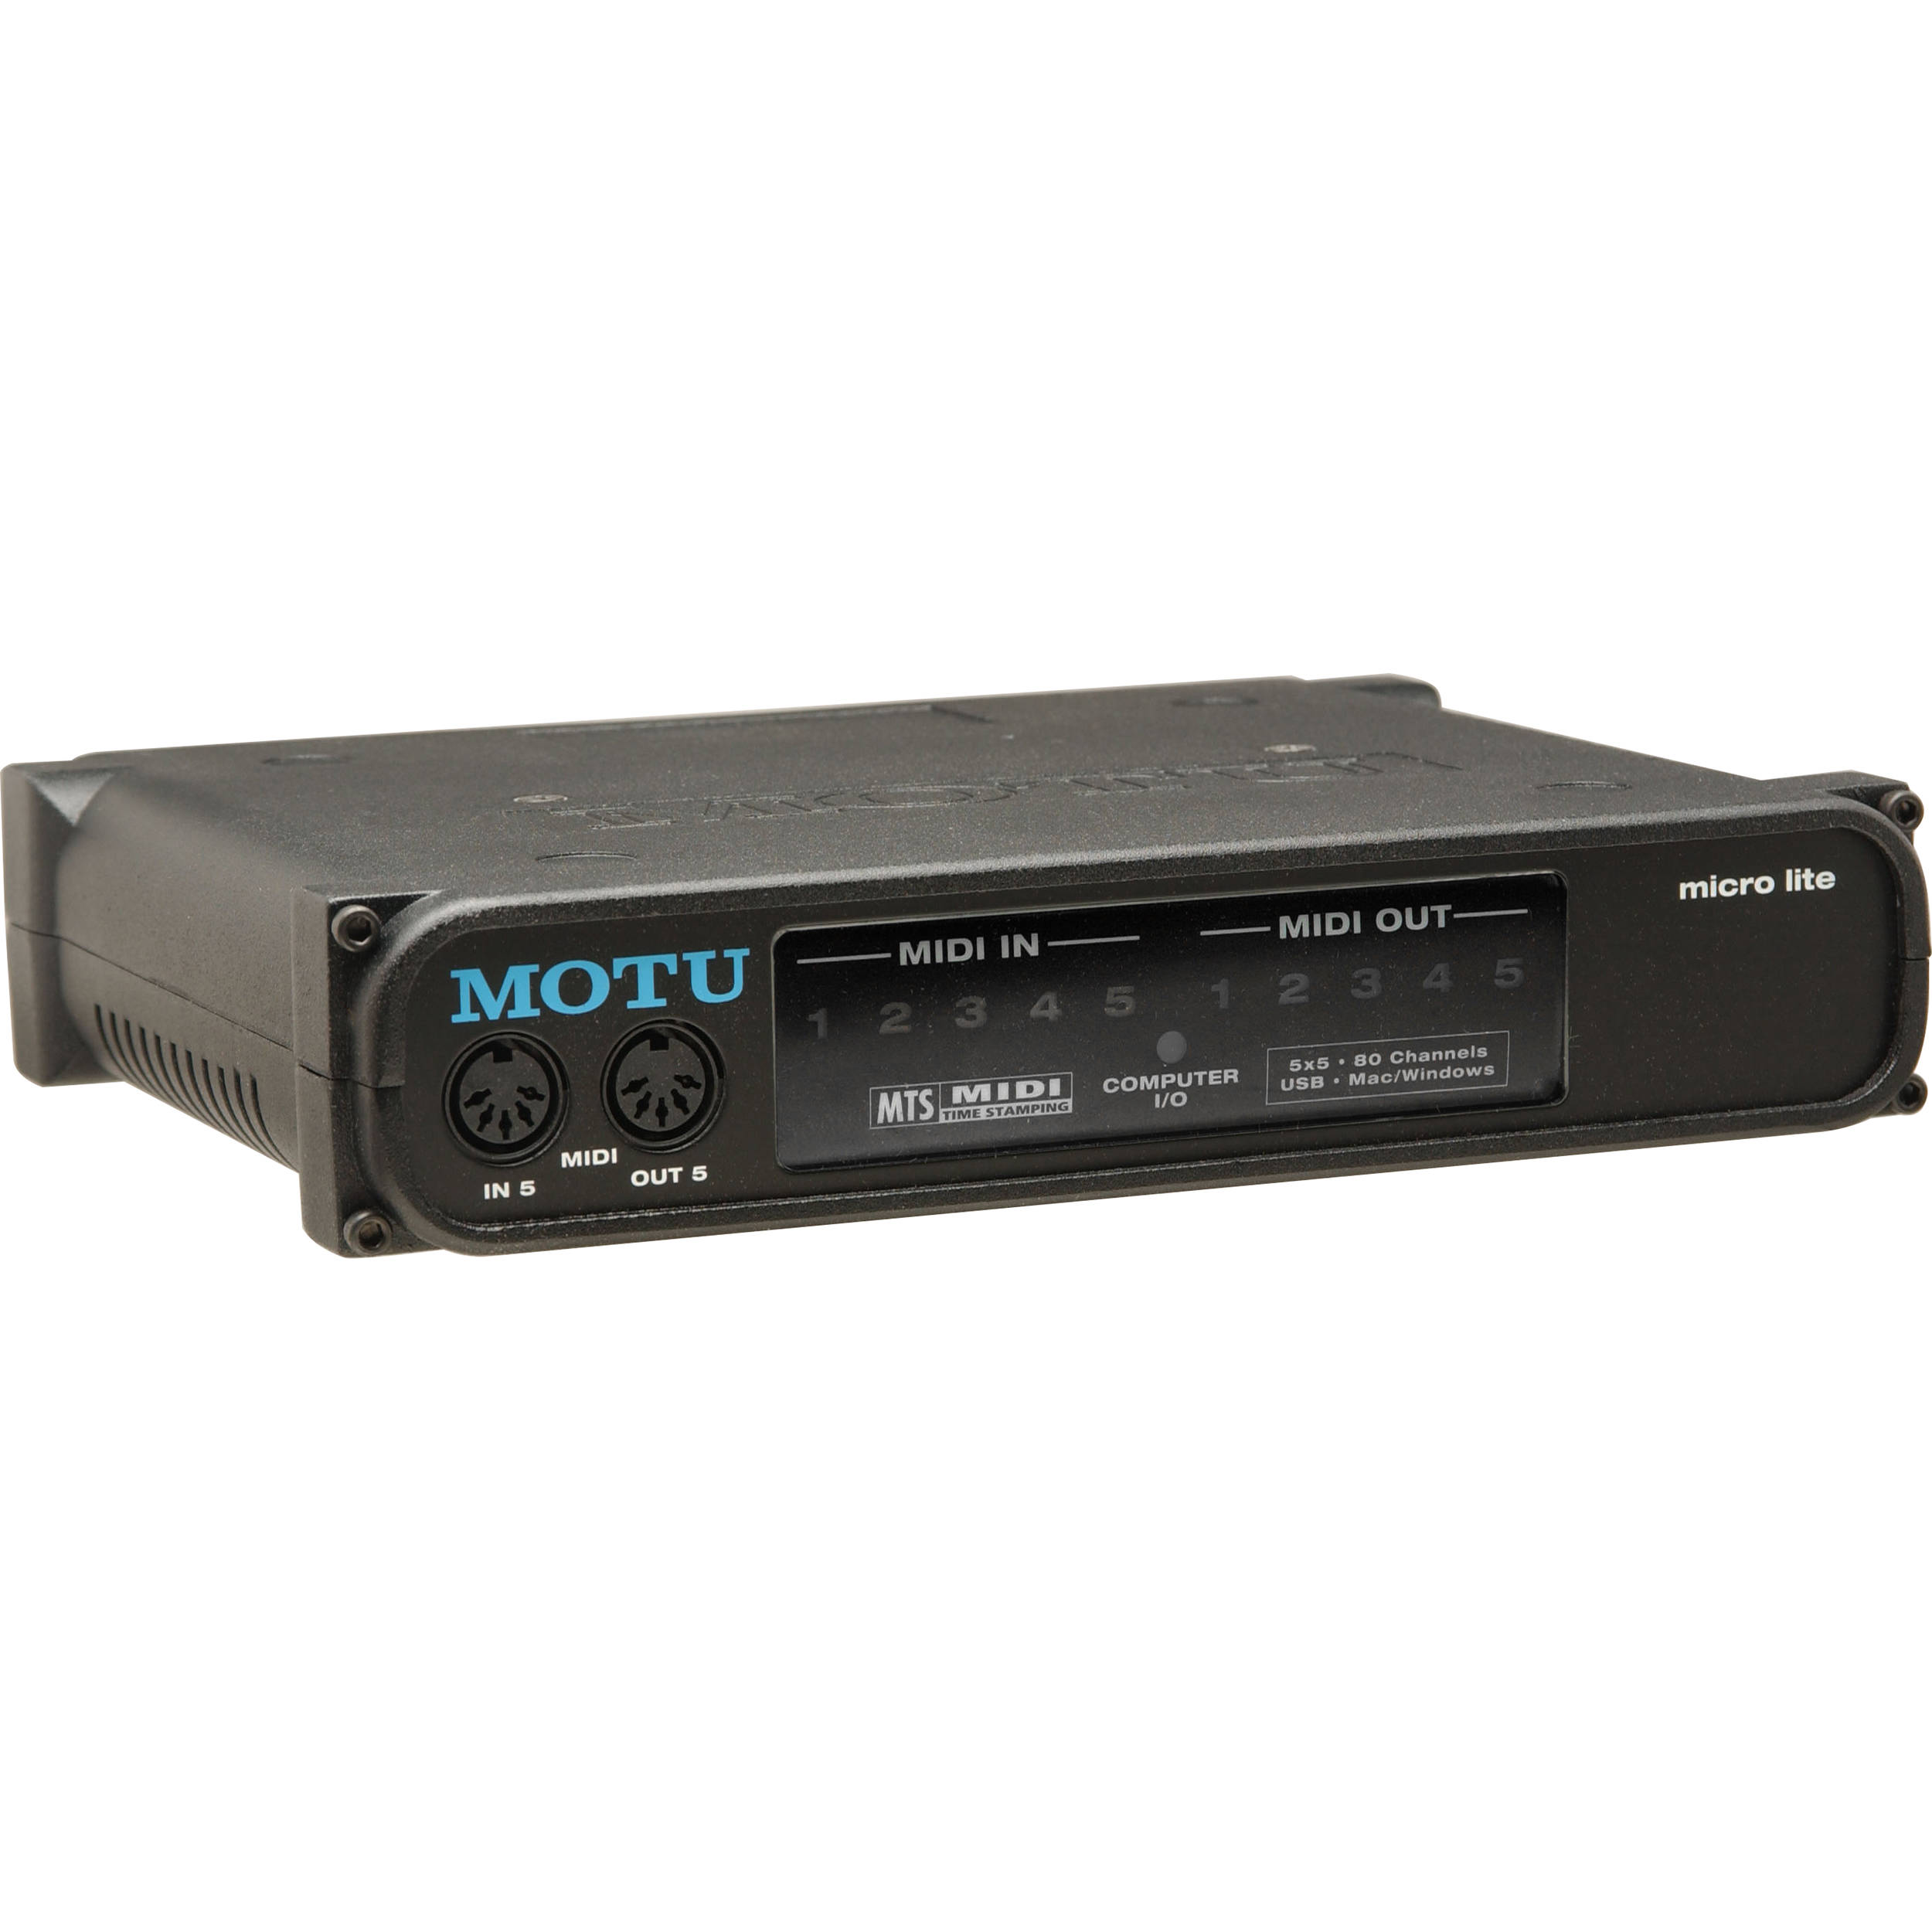 Микро лайт. Motu Midi. Motu Micro Lite. Motu Fastline USB. Аудиоинтерфейс Motu Micro Lite.